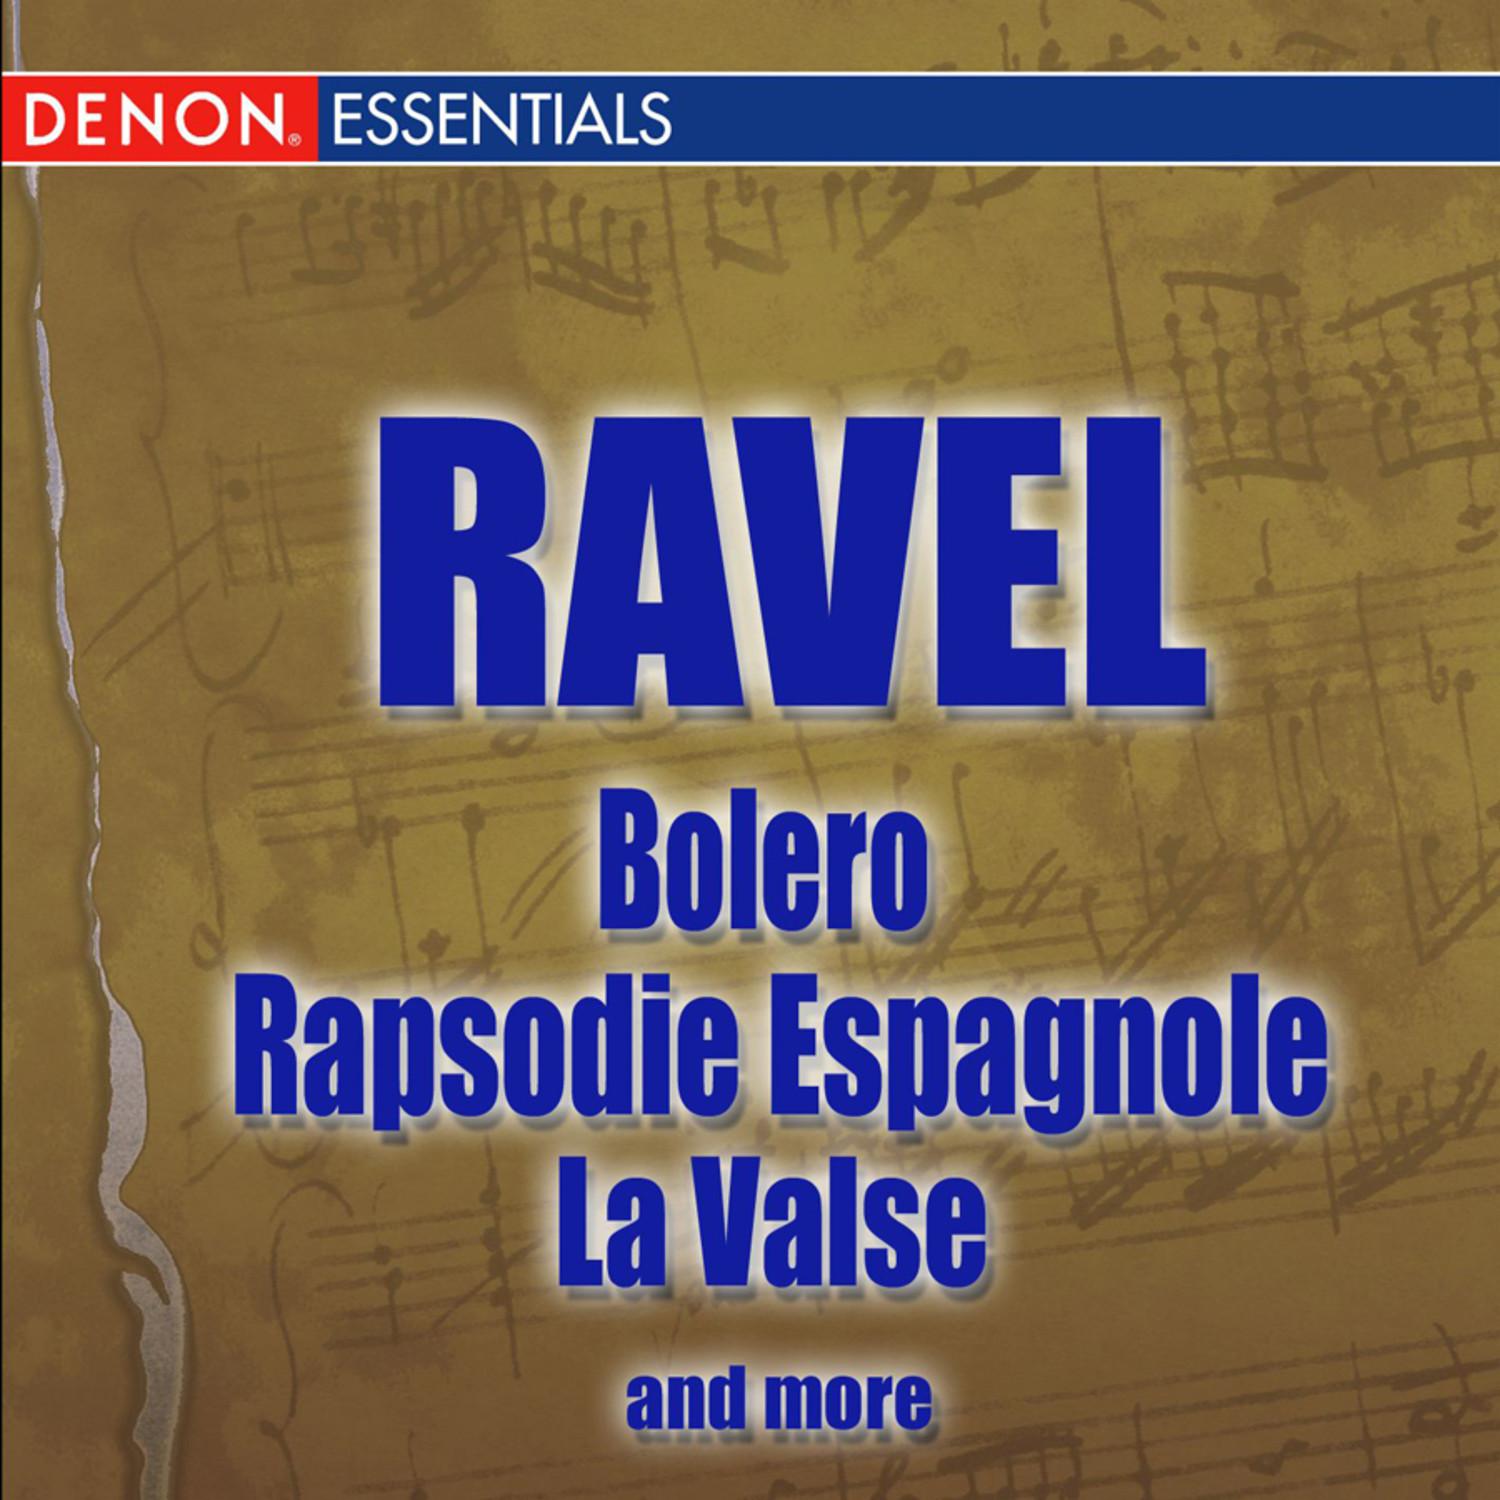 Ravel: Bolero - Rapsody Espagnole - La Valse and more